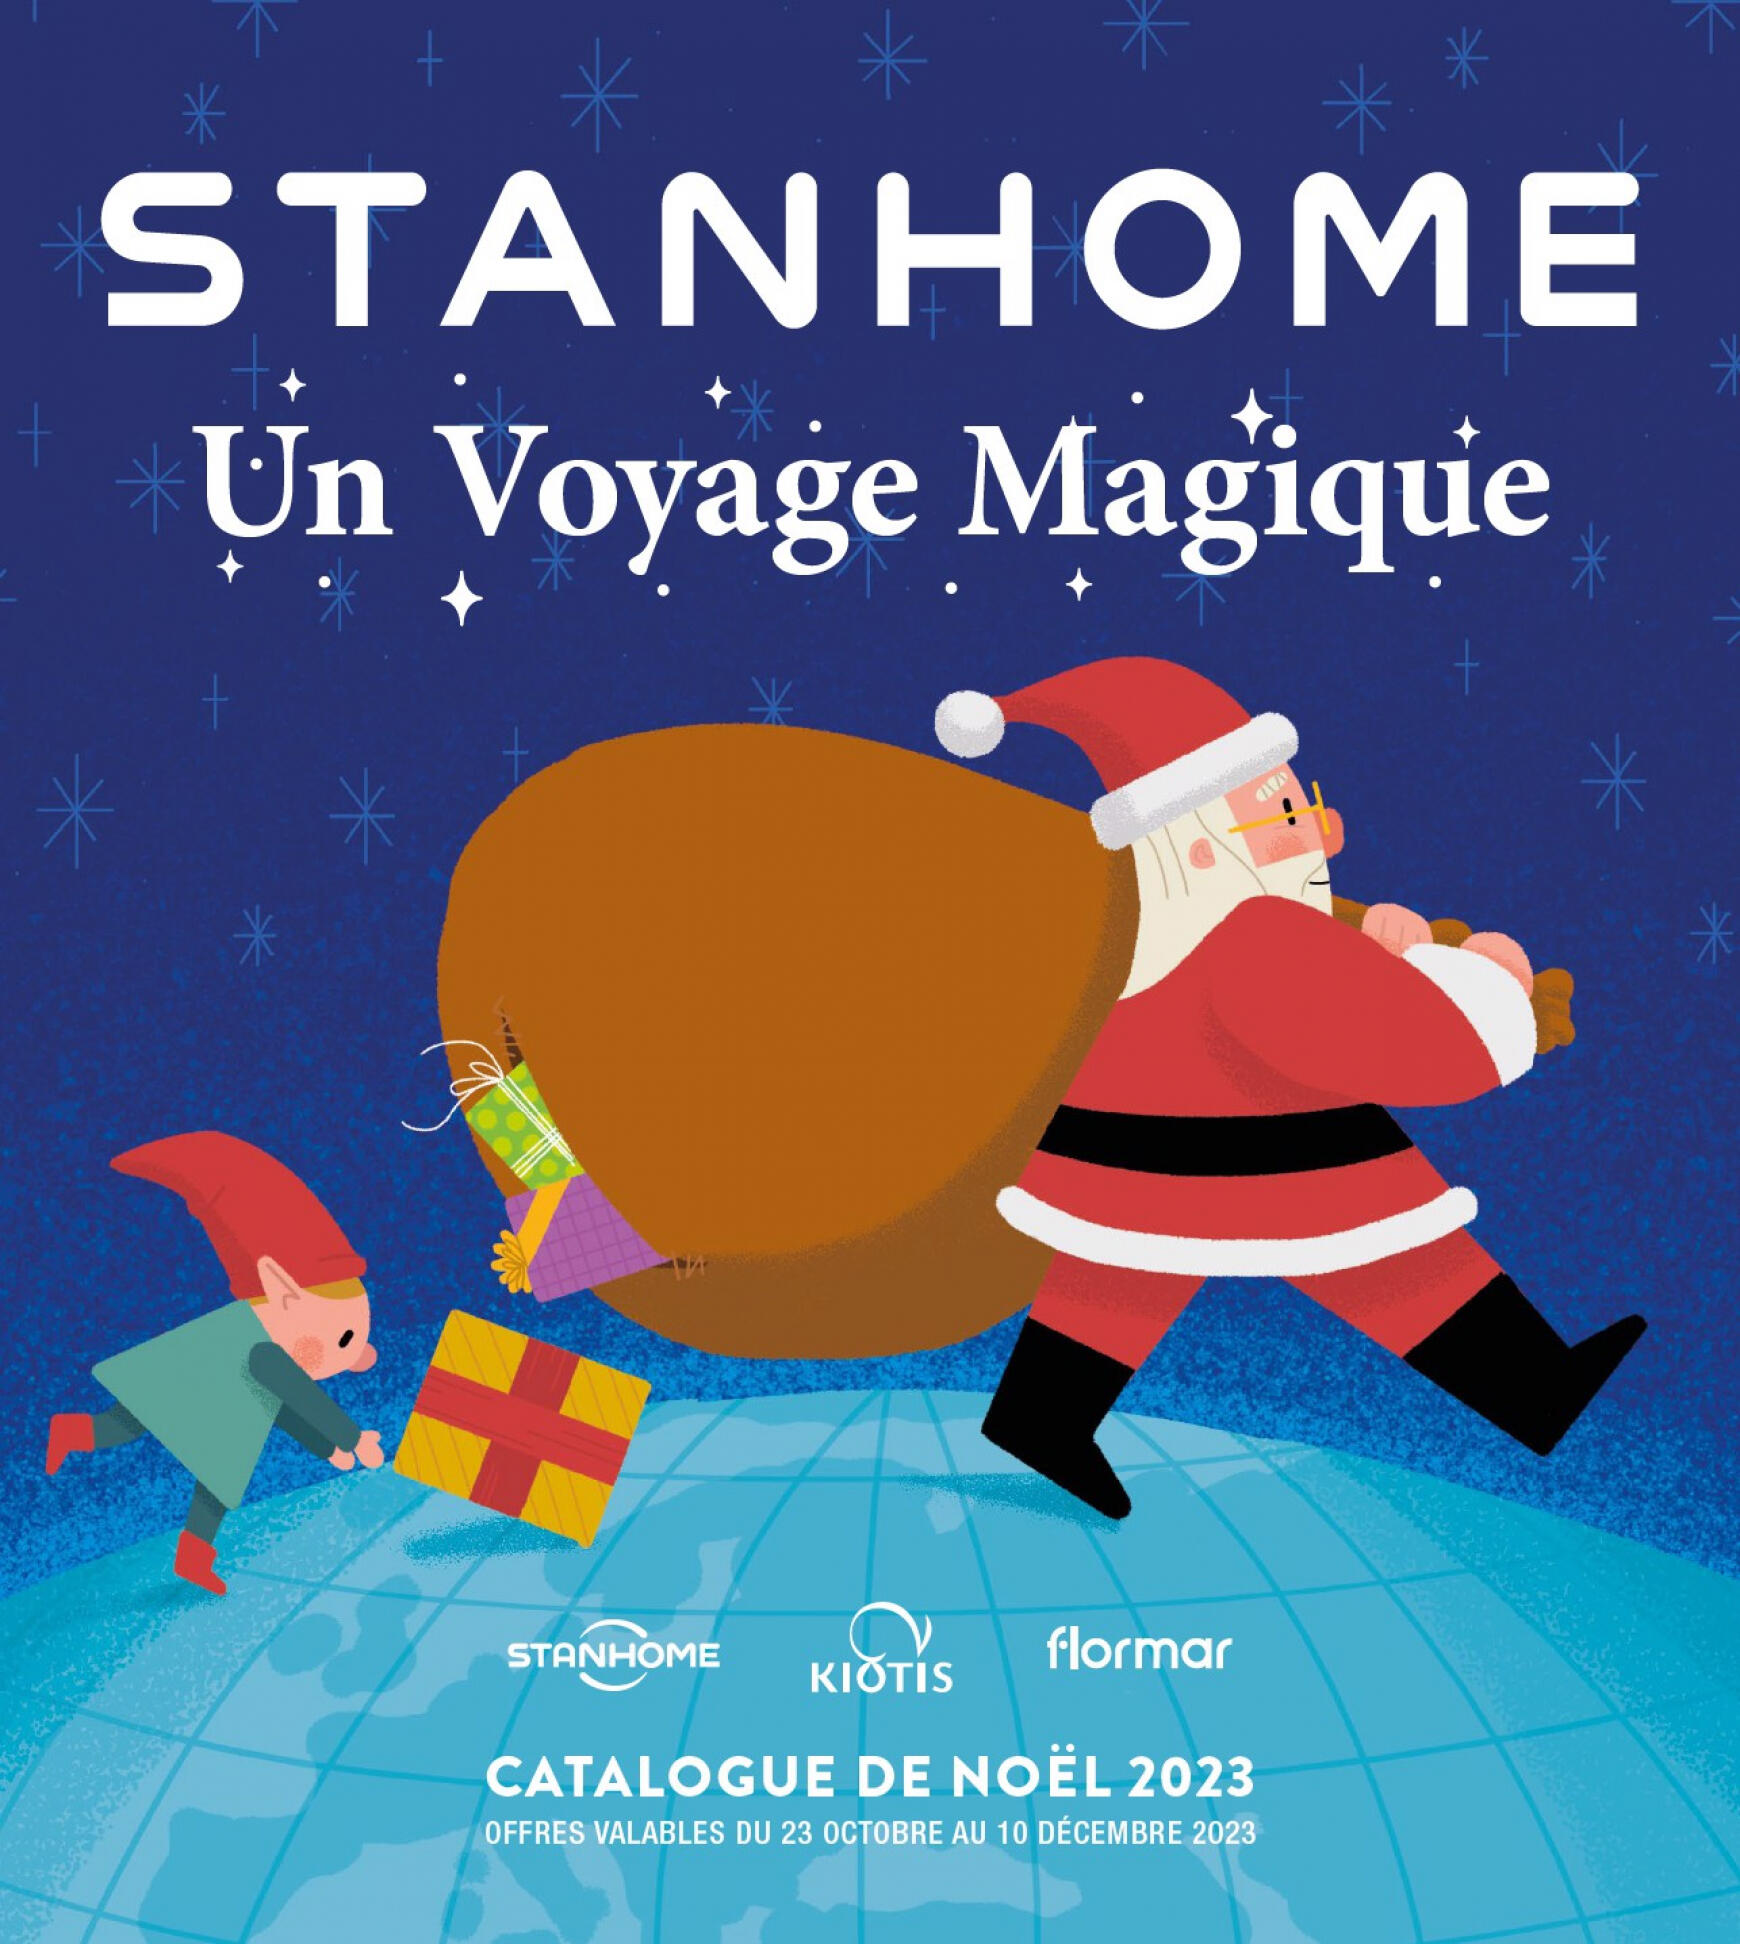 stanhome - Stanhome - UN VOYAGE MAGIQUE - page: 1